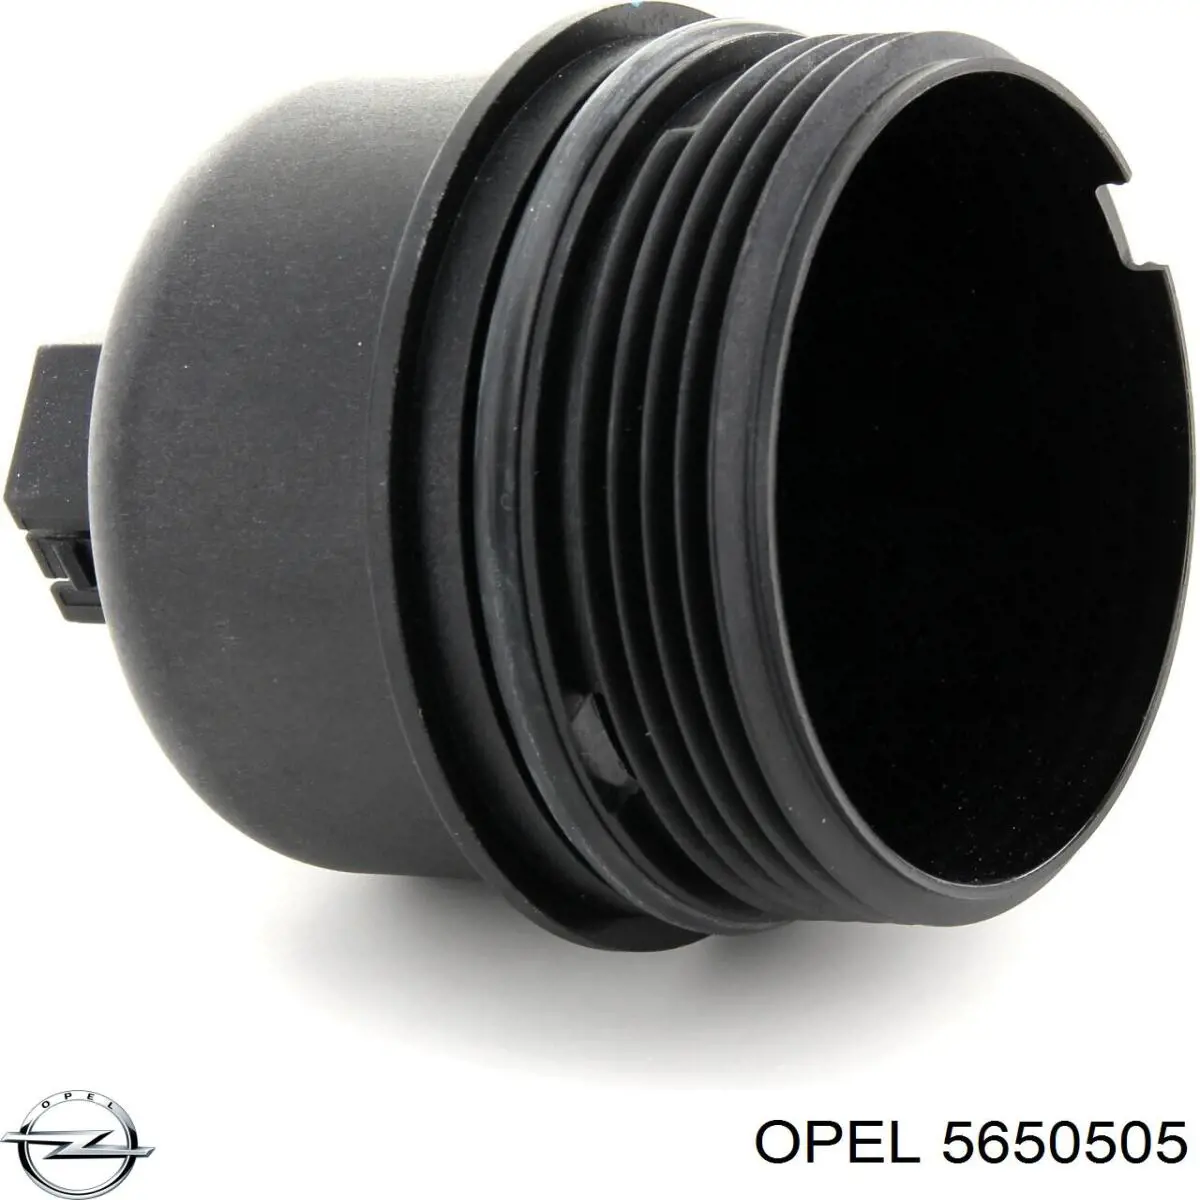 5650505 Opel tapa de filtro de aceite